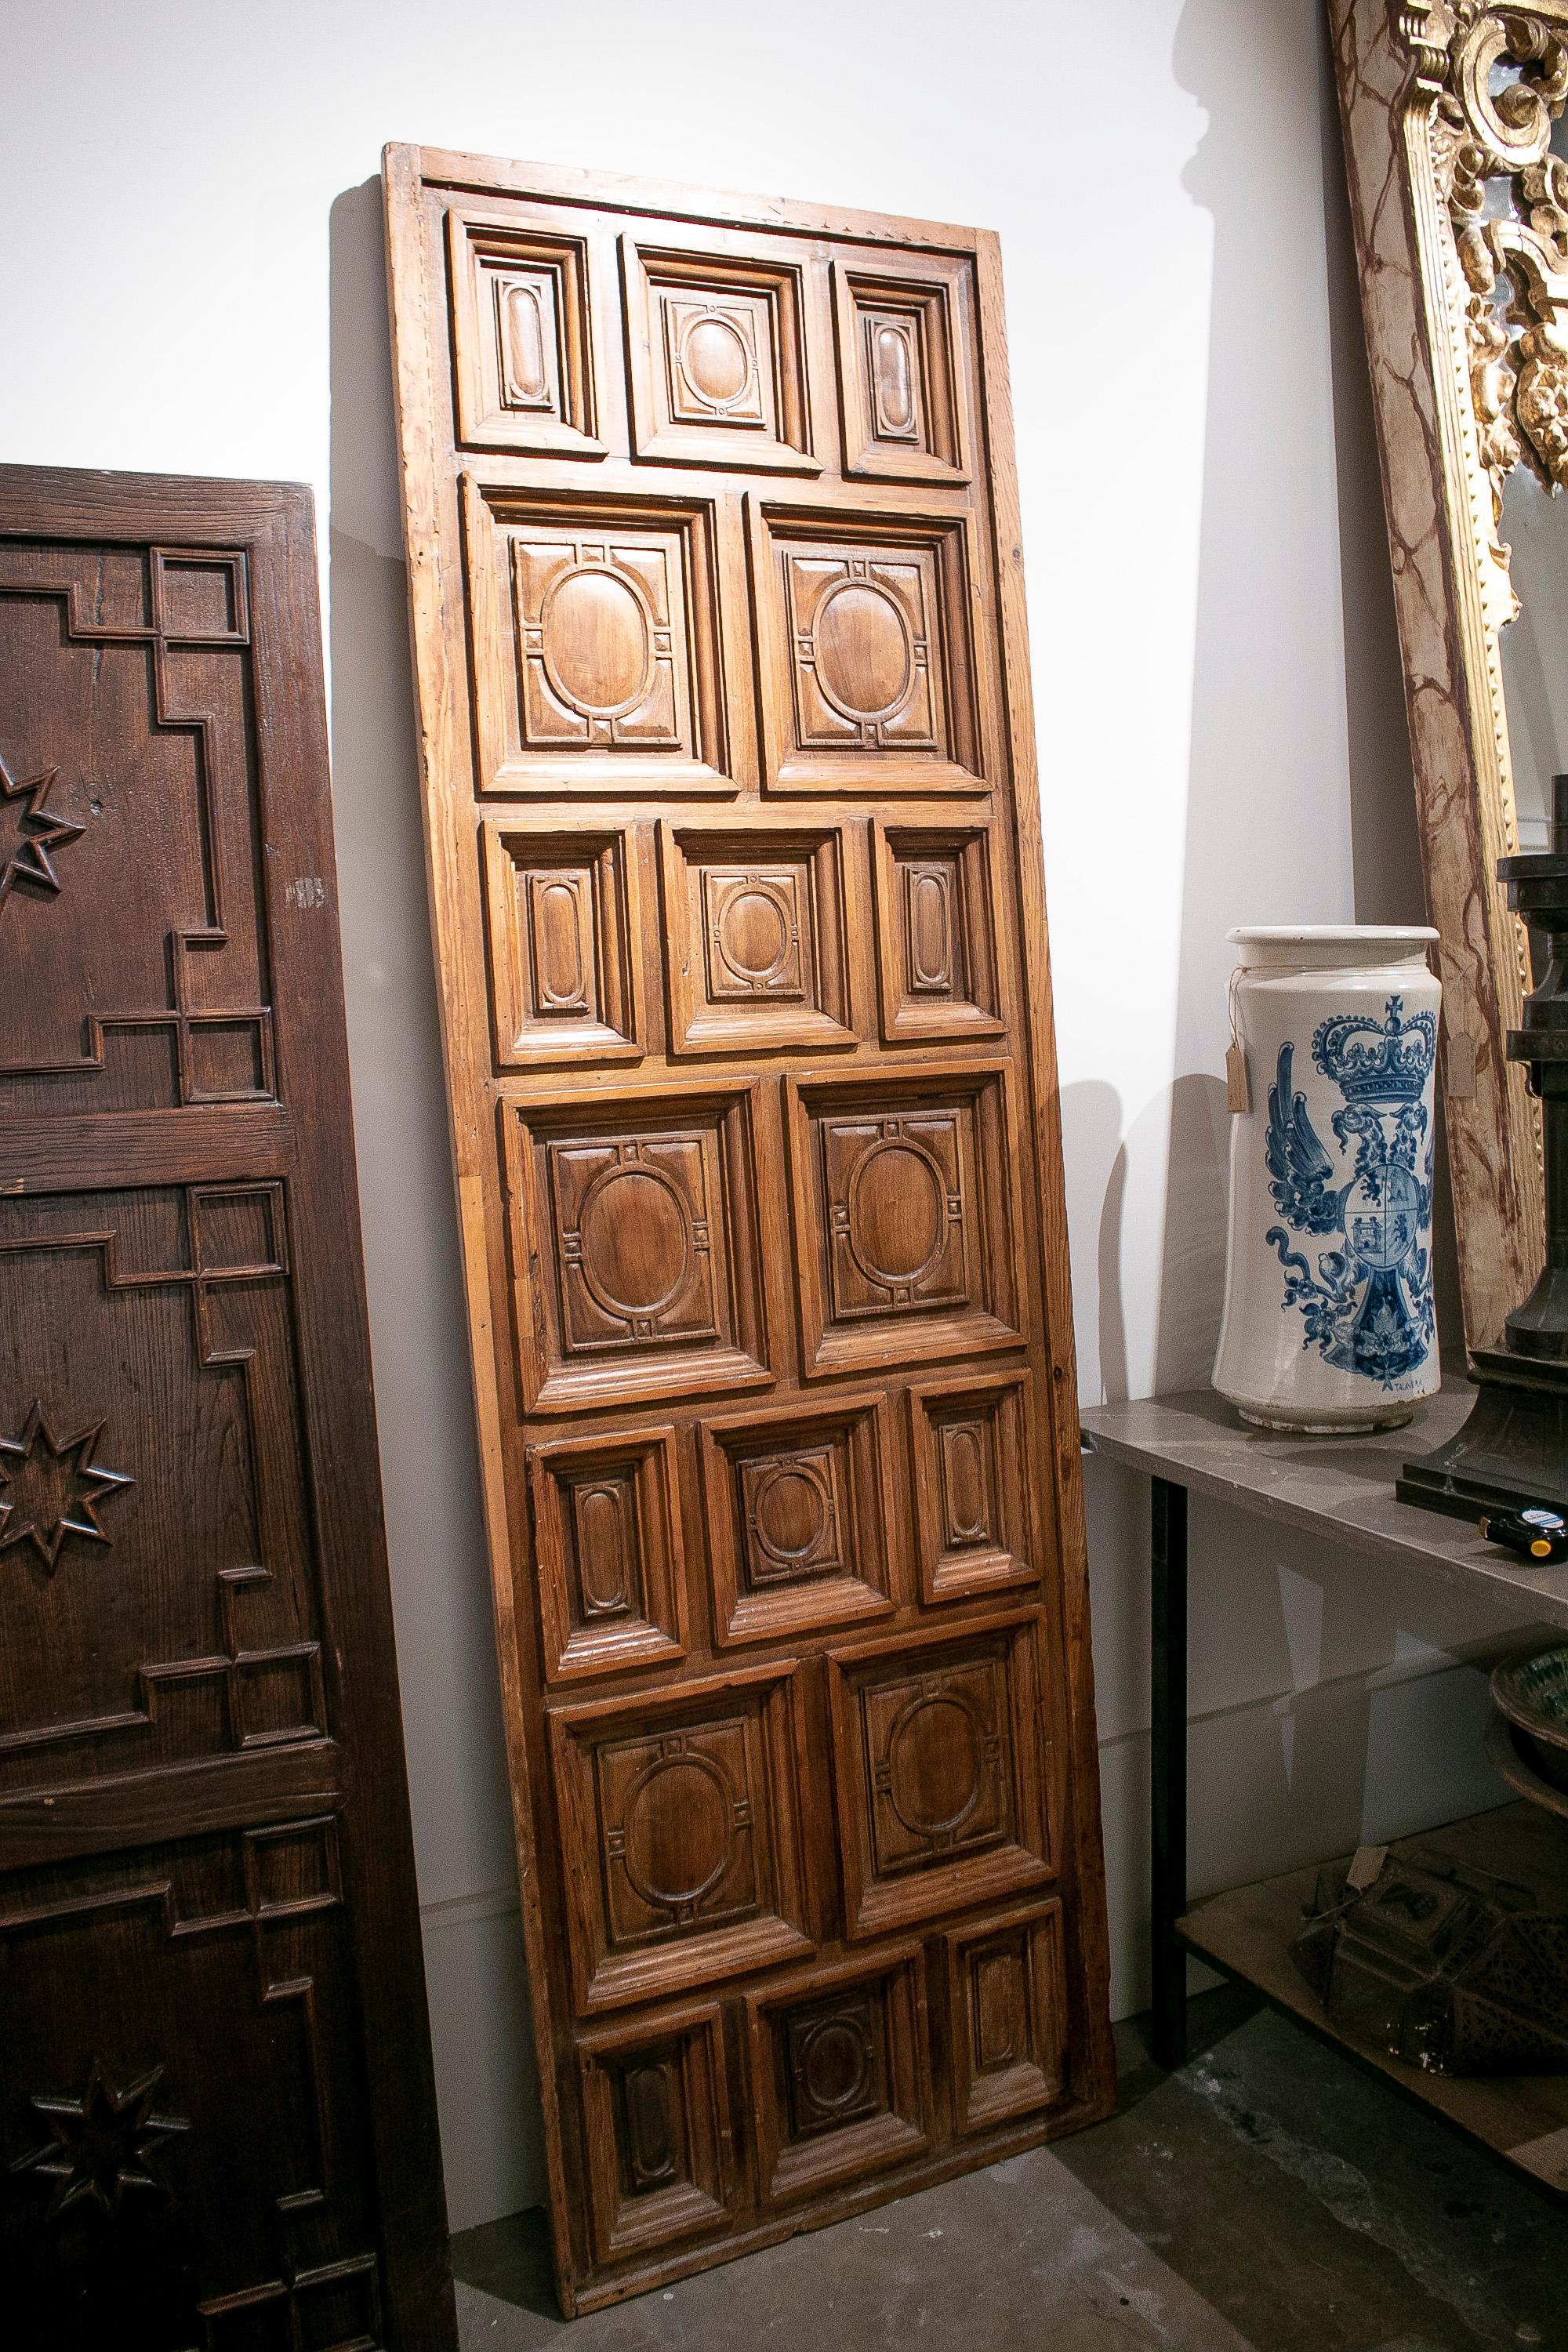 Antique 17th century Spanish geometric panelled hand carve wooden door panel.